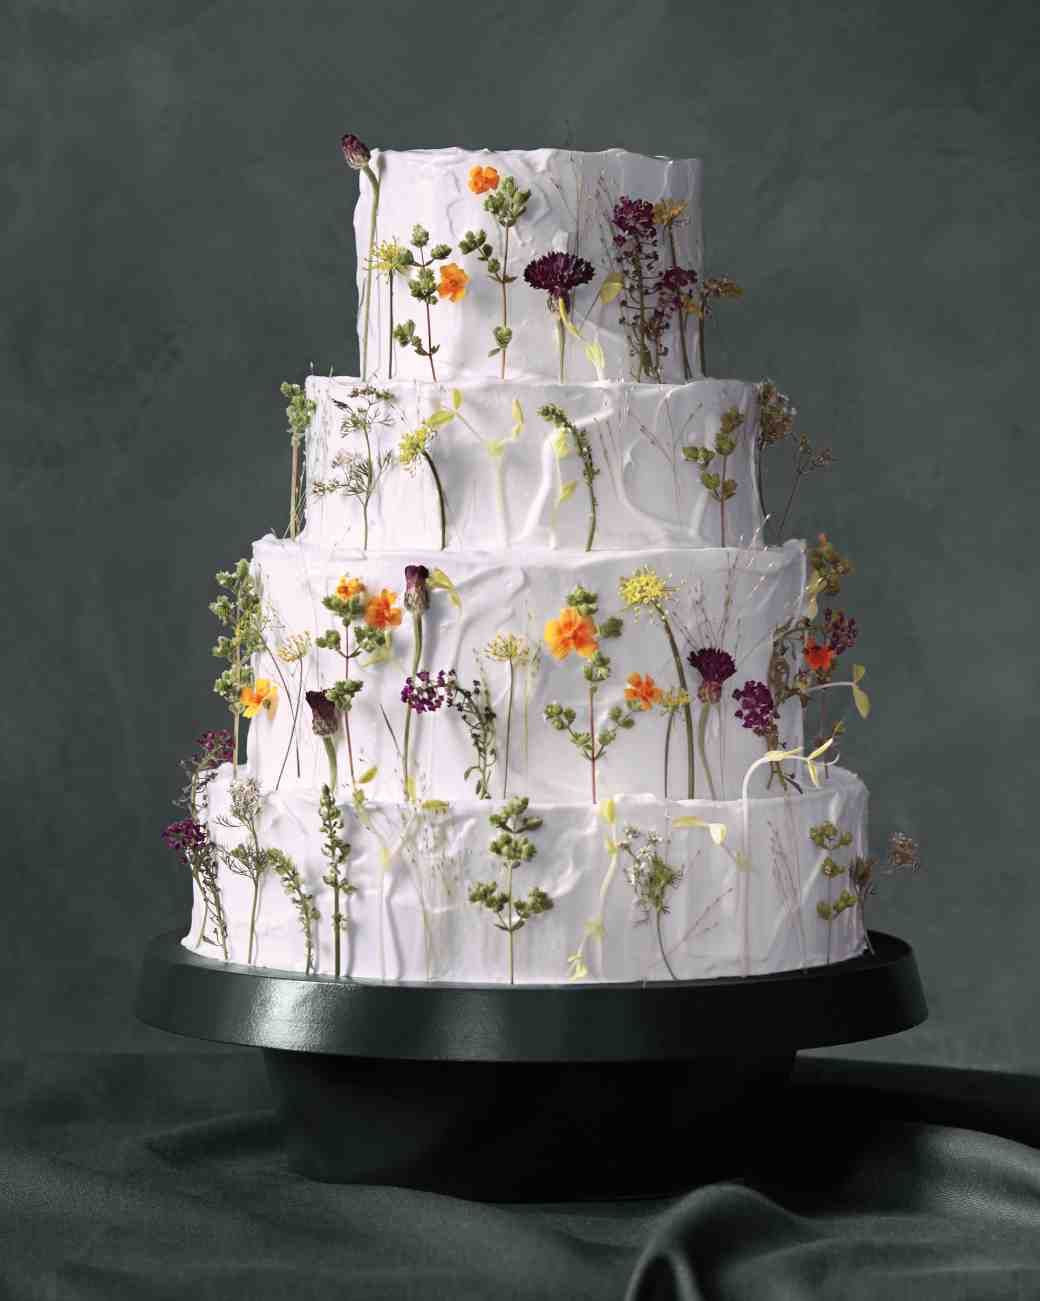 Decorating A Wedding Cake
 6 Fresh Ways to Decorate Wedding Cakes With Flowers